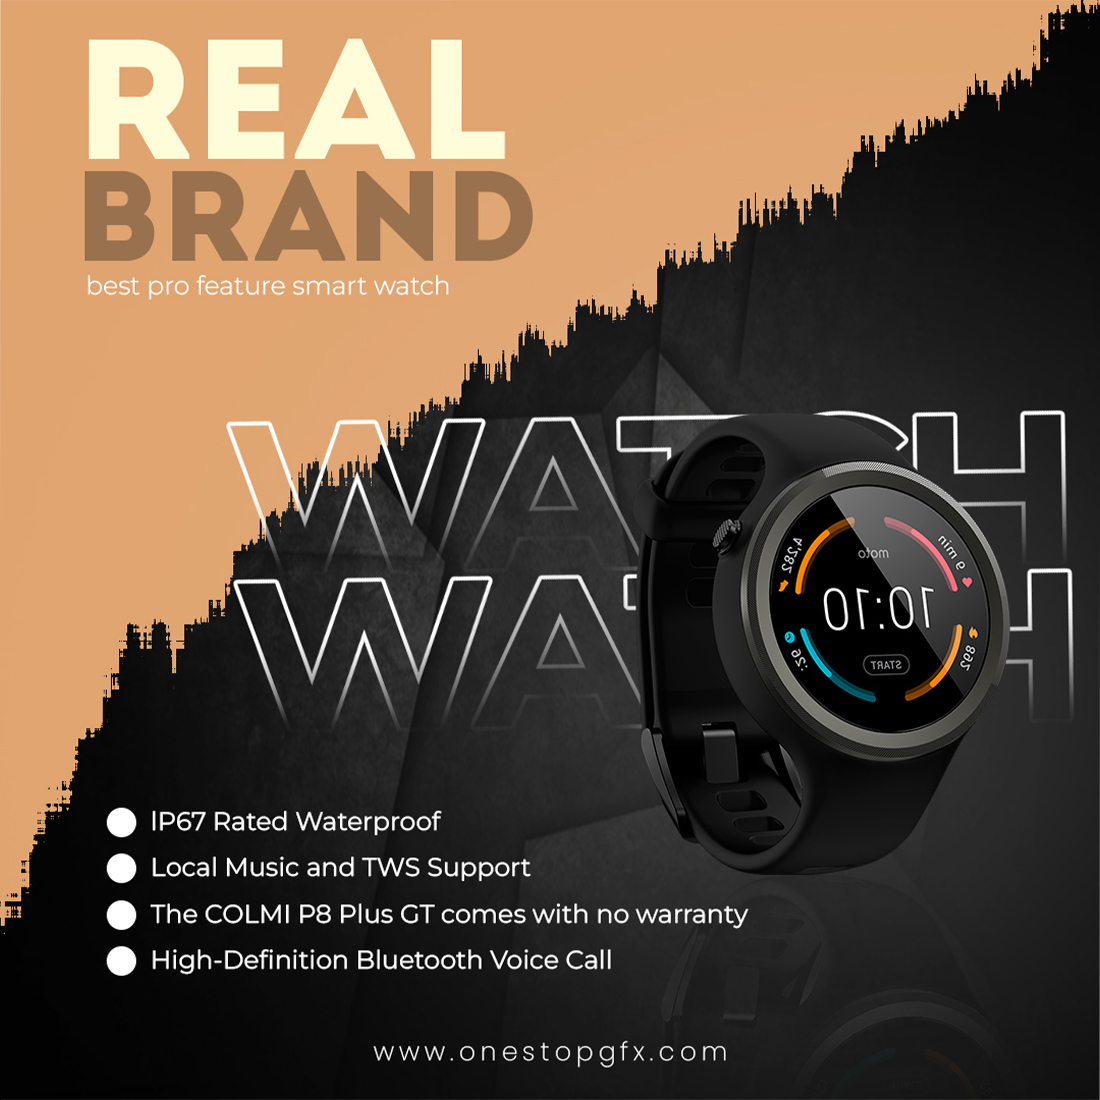 Smart Watch Social Media Post Design cover image.